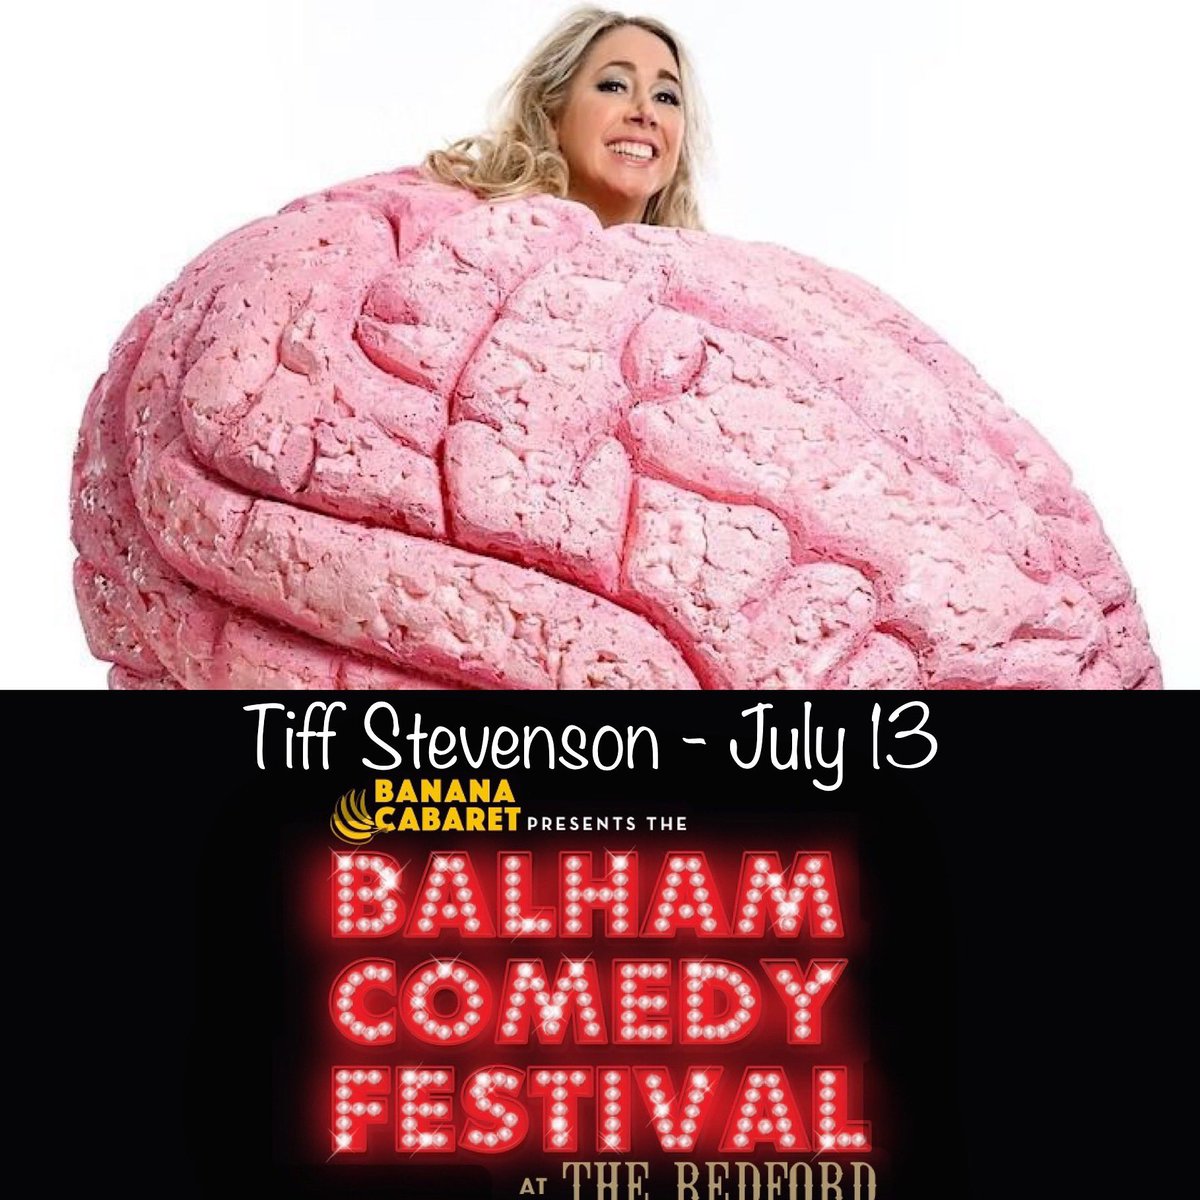 🍌Tiff STEVENSON - “Choice Bits Of Sexy Brain” - Thursday, 13 July🧠

🎫 TICKETS balhamcomedyfestival.com

@TheBedfordPub @ThreeCheersPubs #balhambanana #balhamcomedyfestival #livestandup 🐒